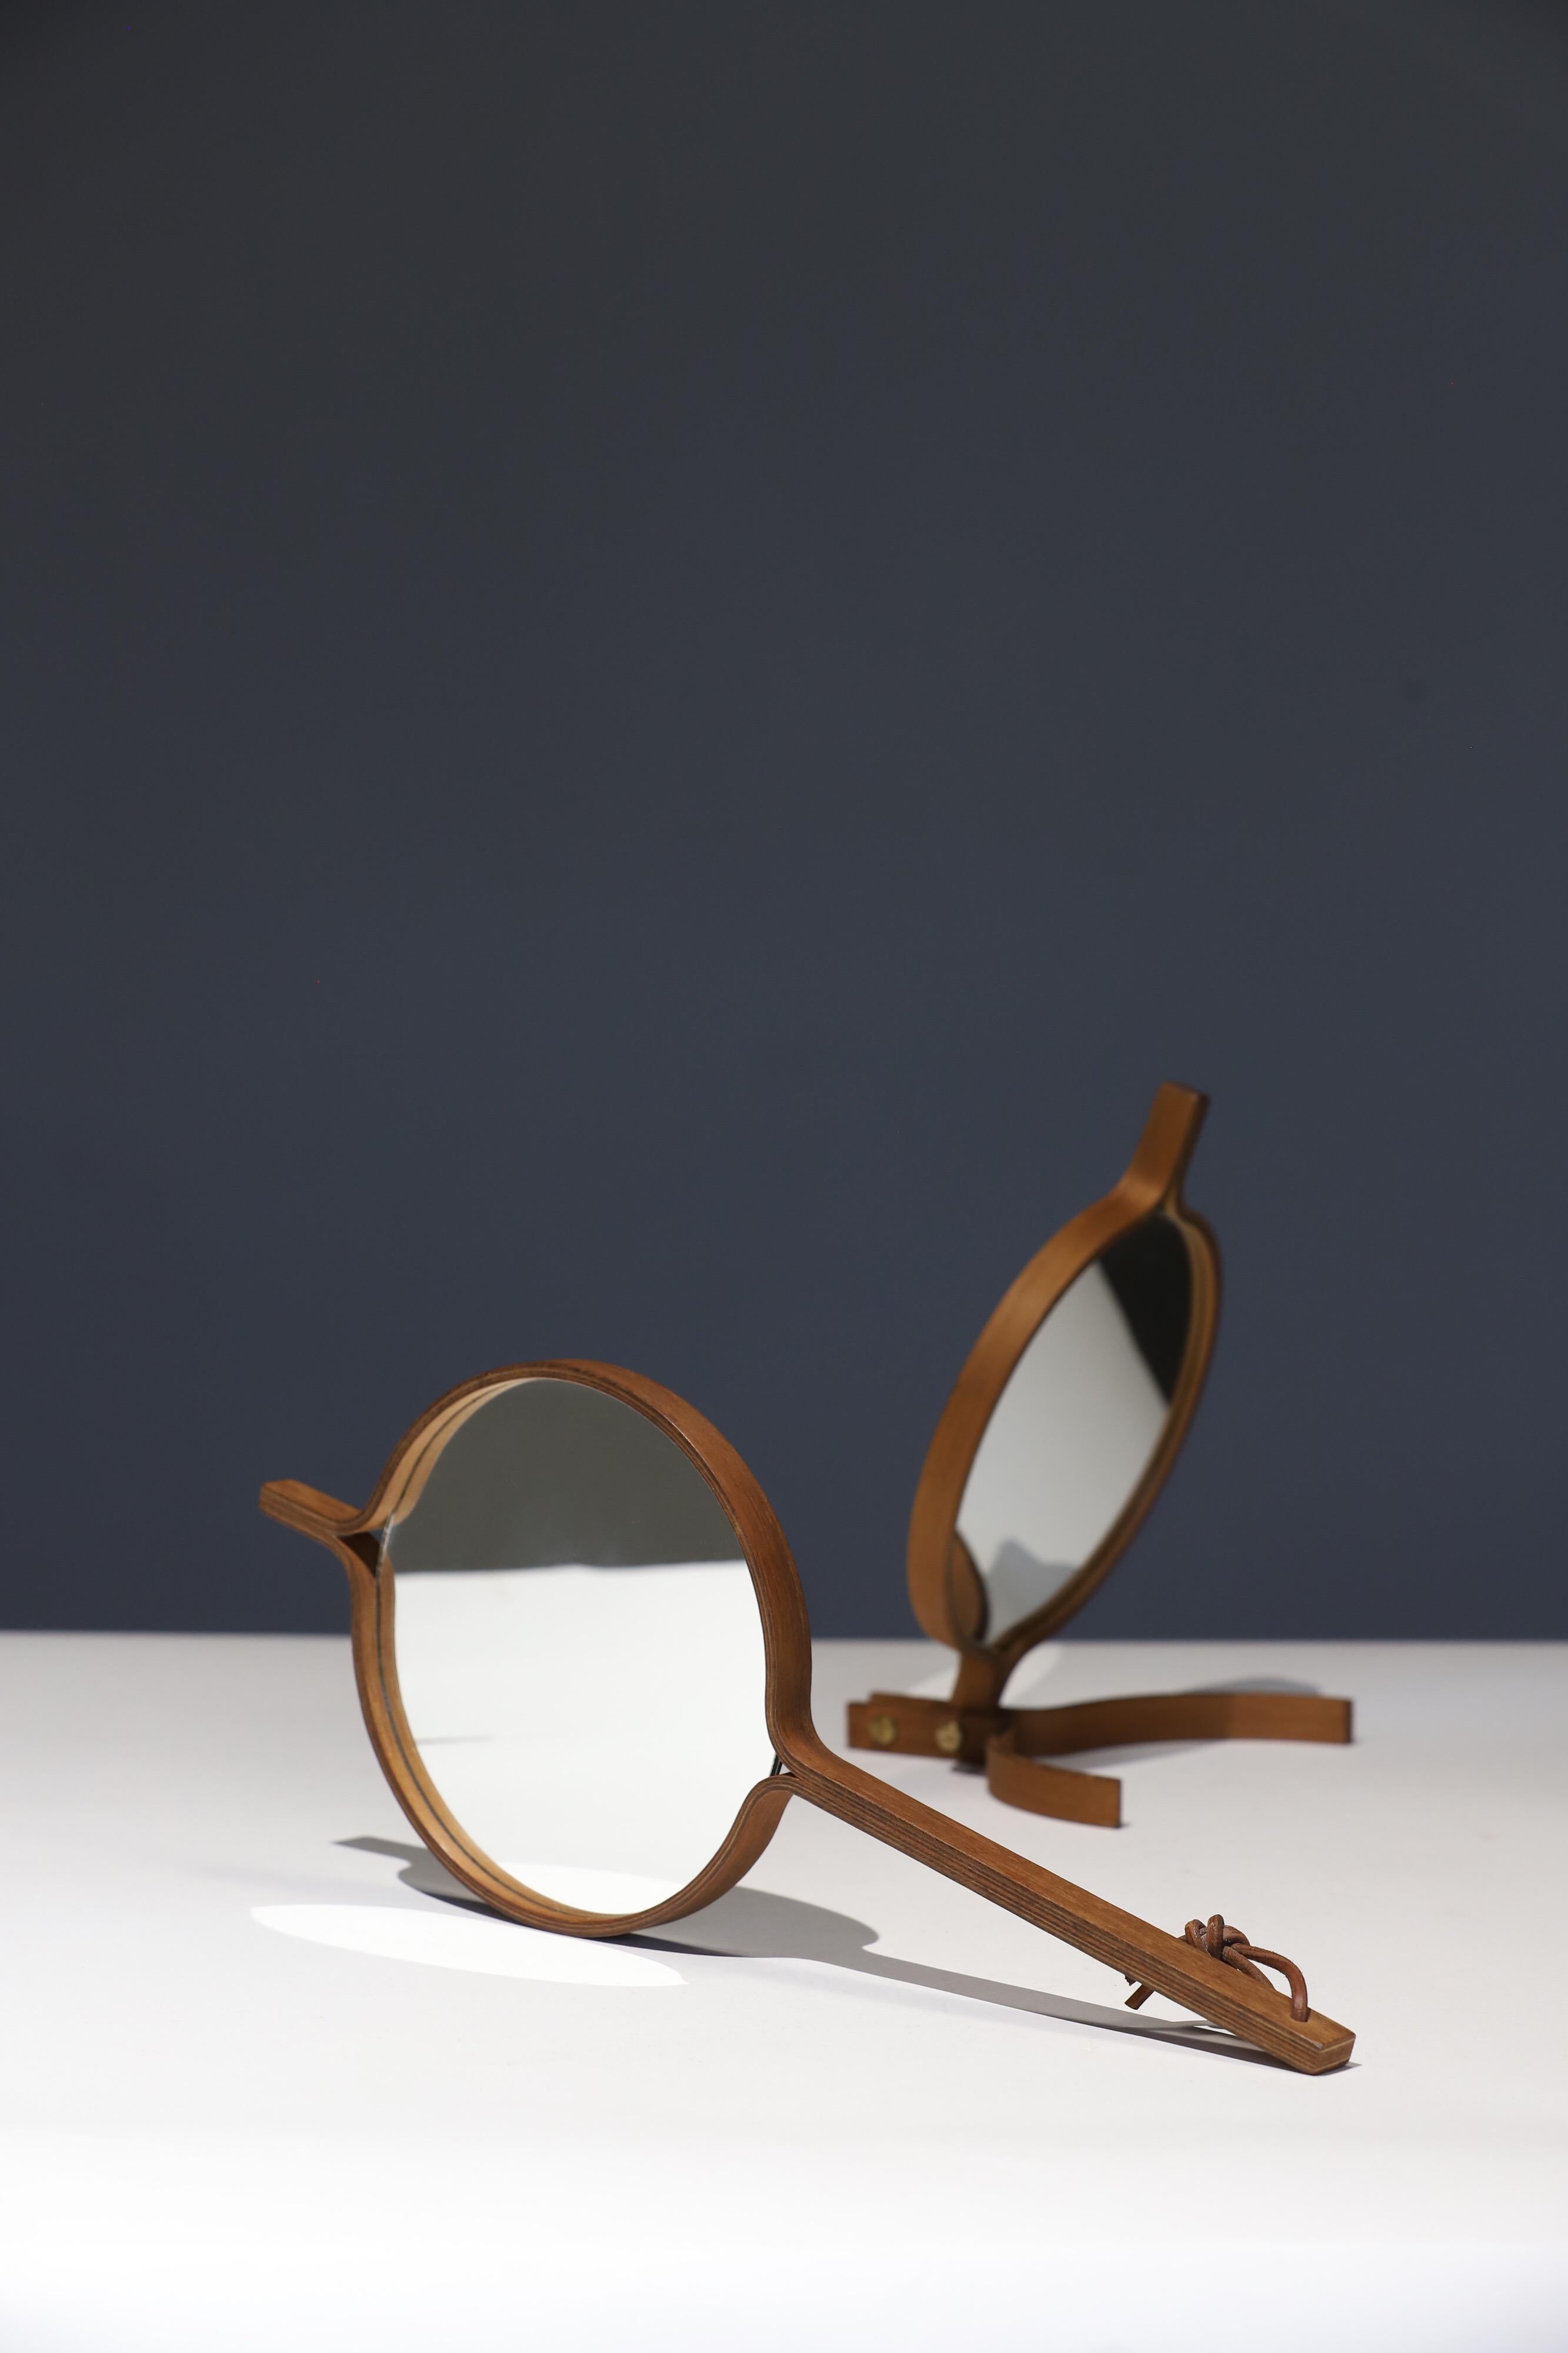 Teak Table Top and Hand Mirror by Jorgen Gammelgaard 4